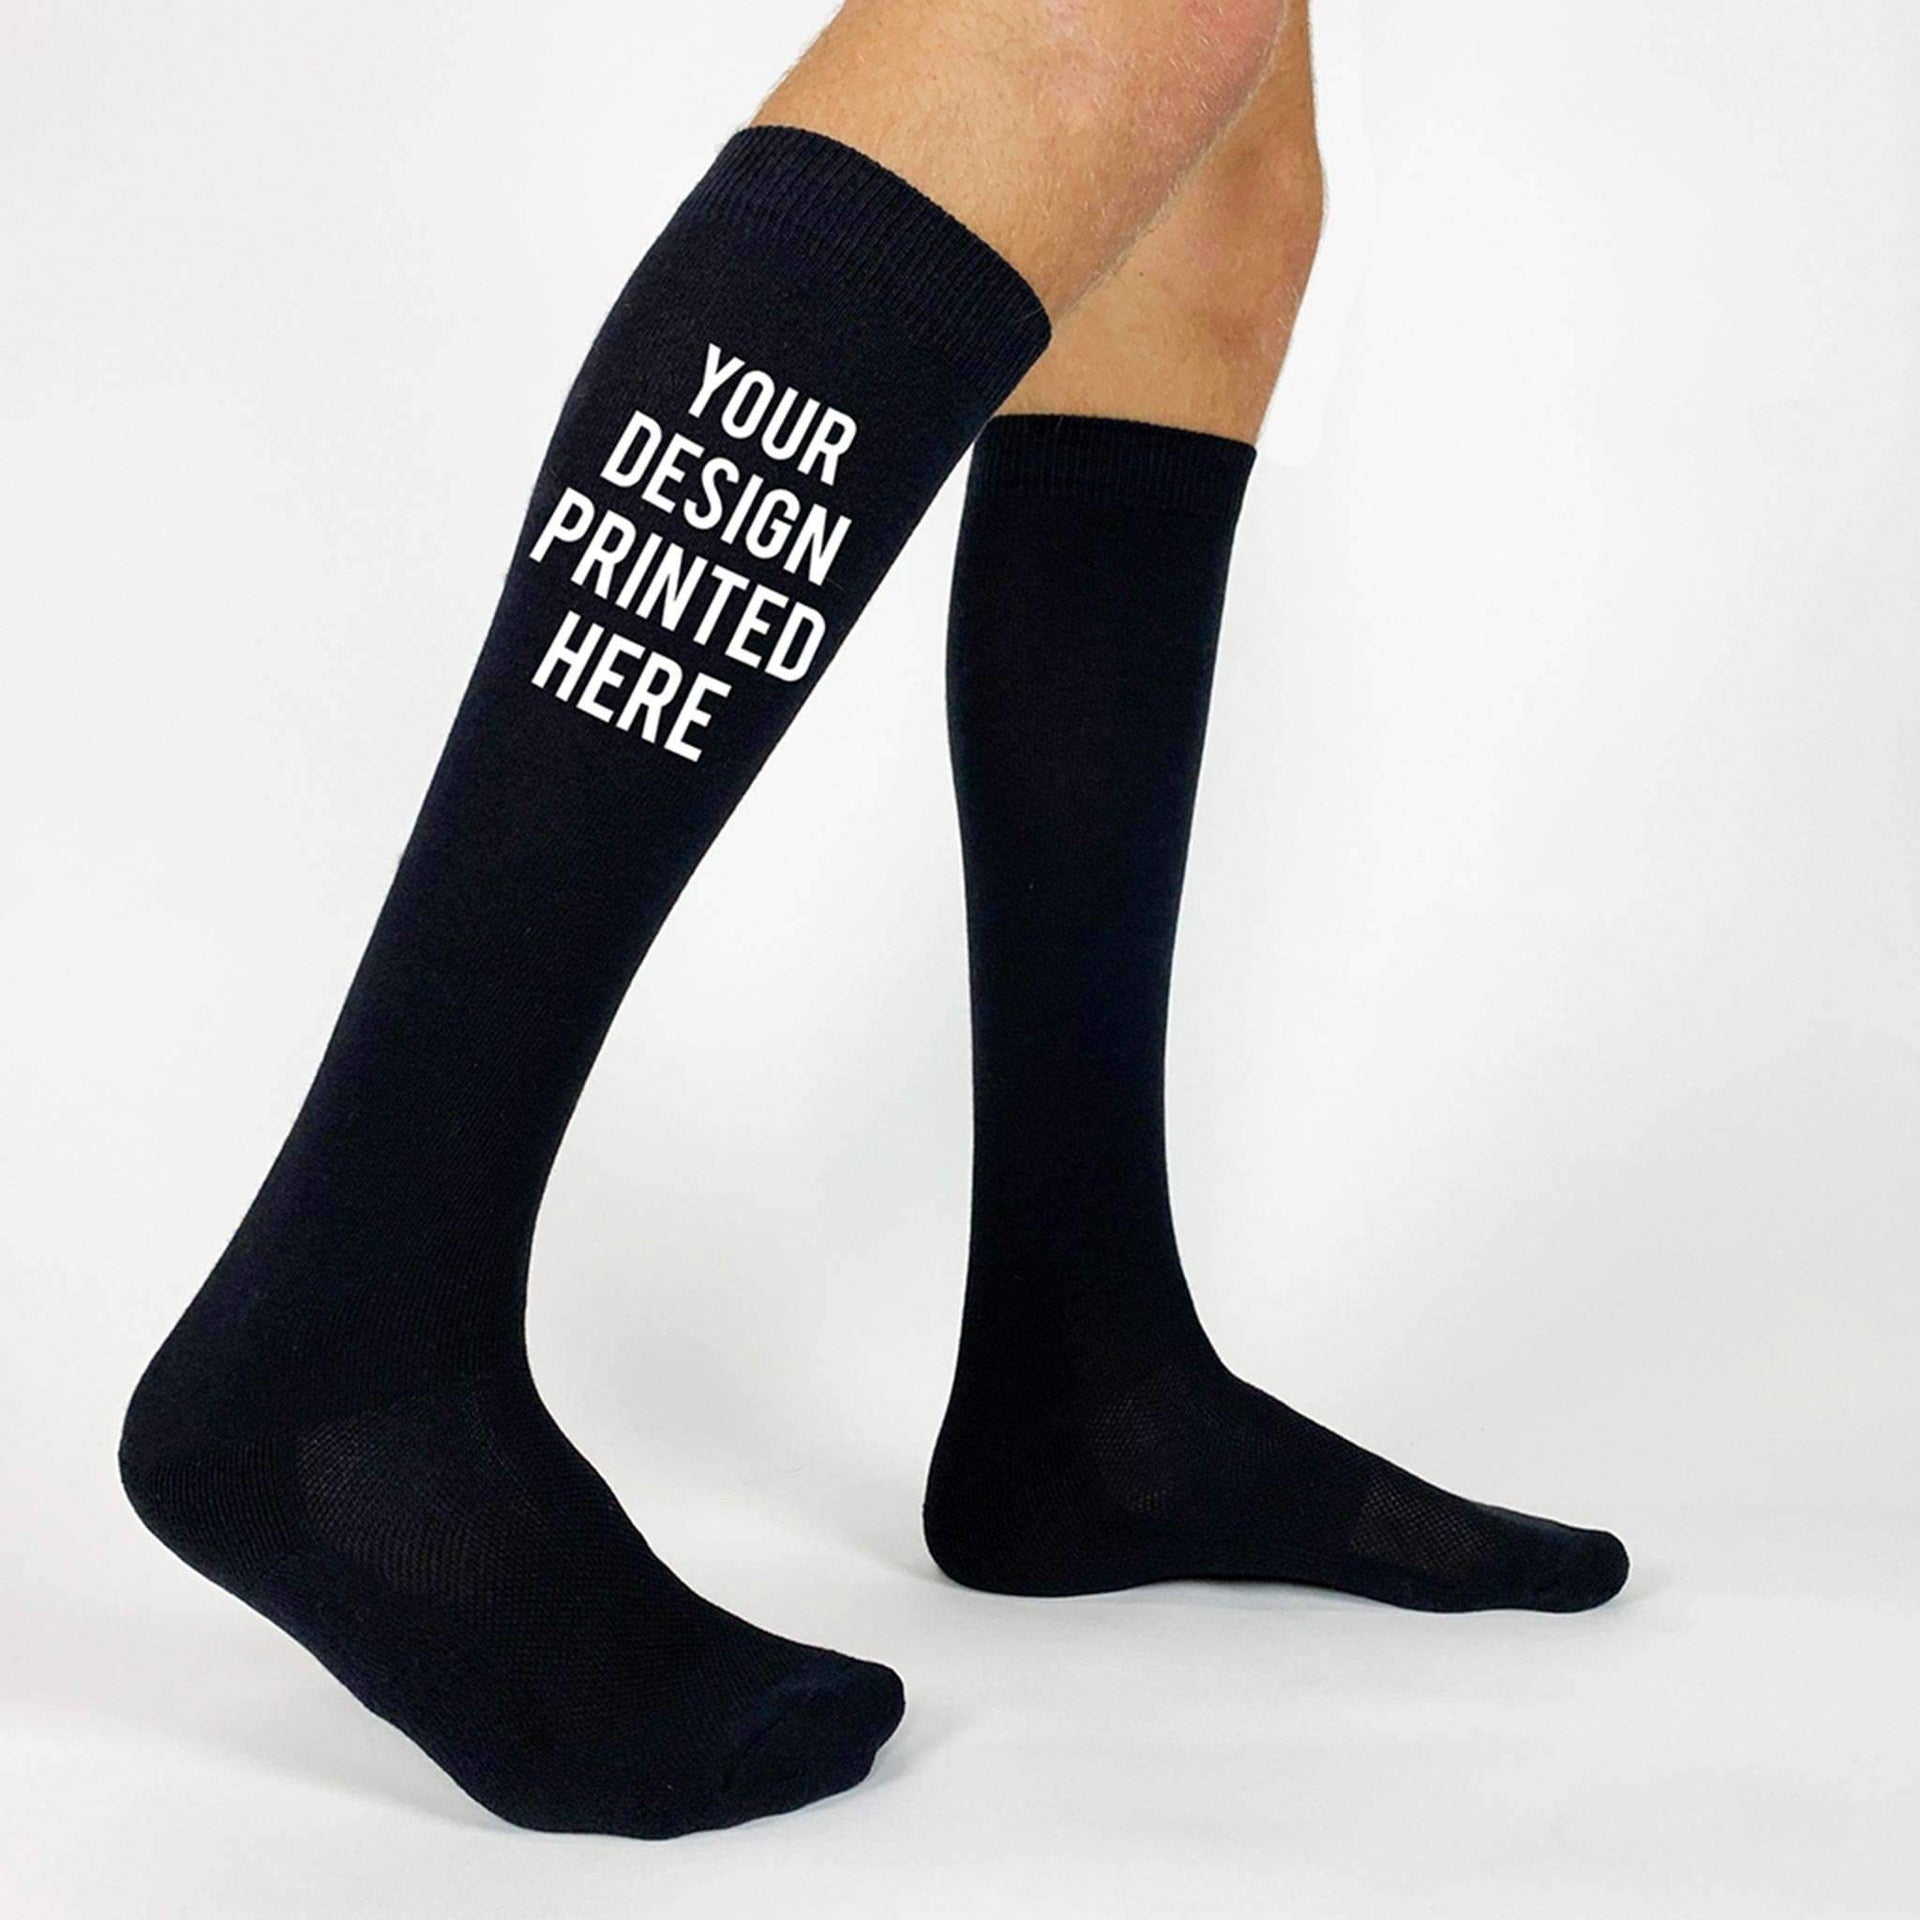 Custom Printed Black All Purpose Sport Knee High